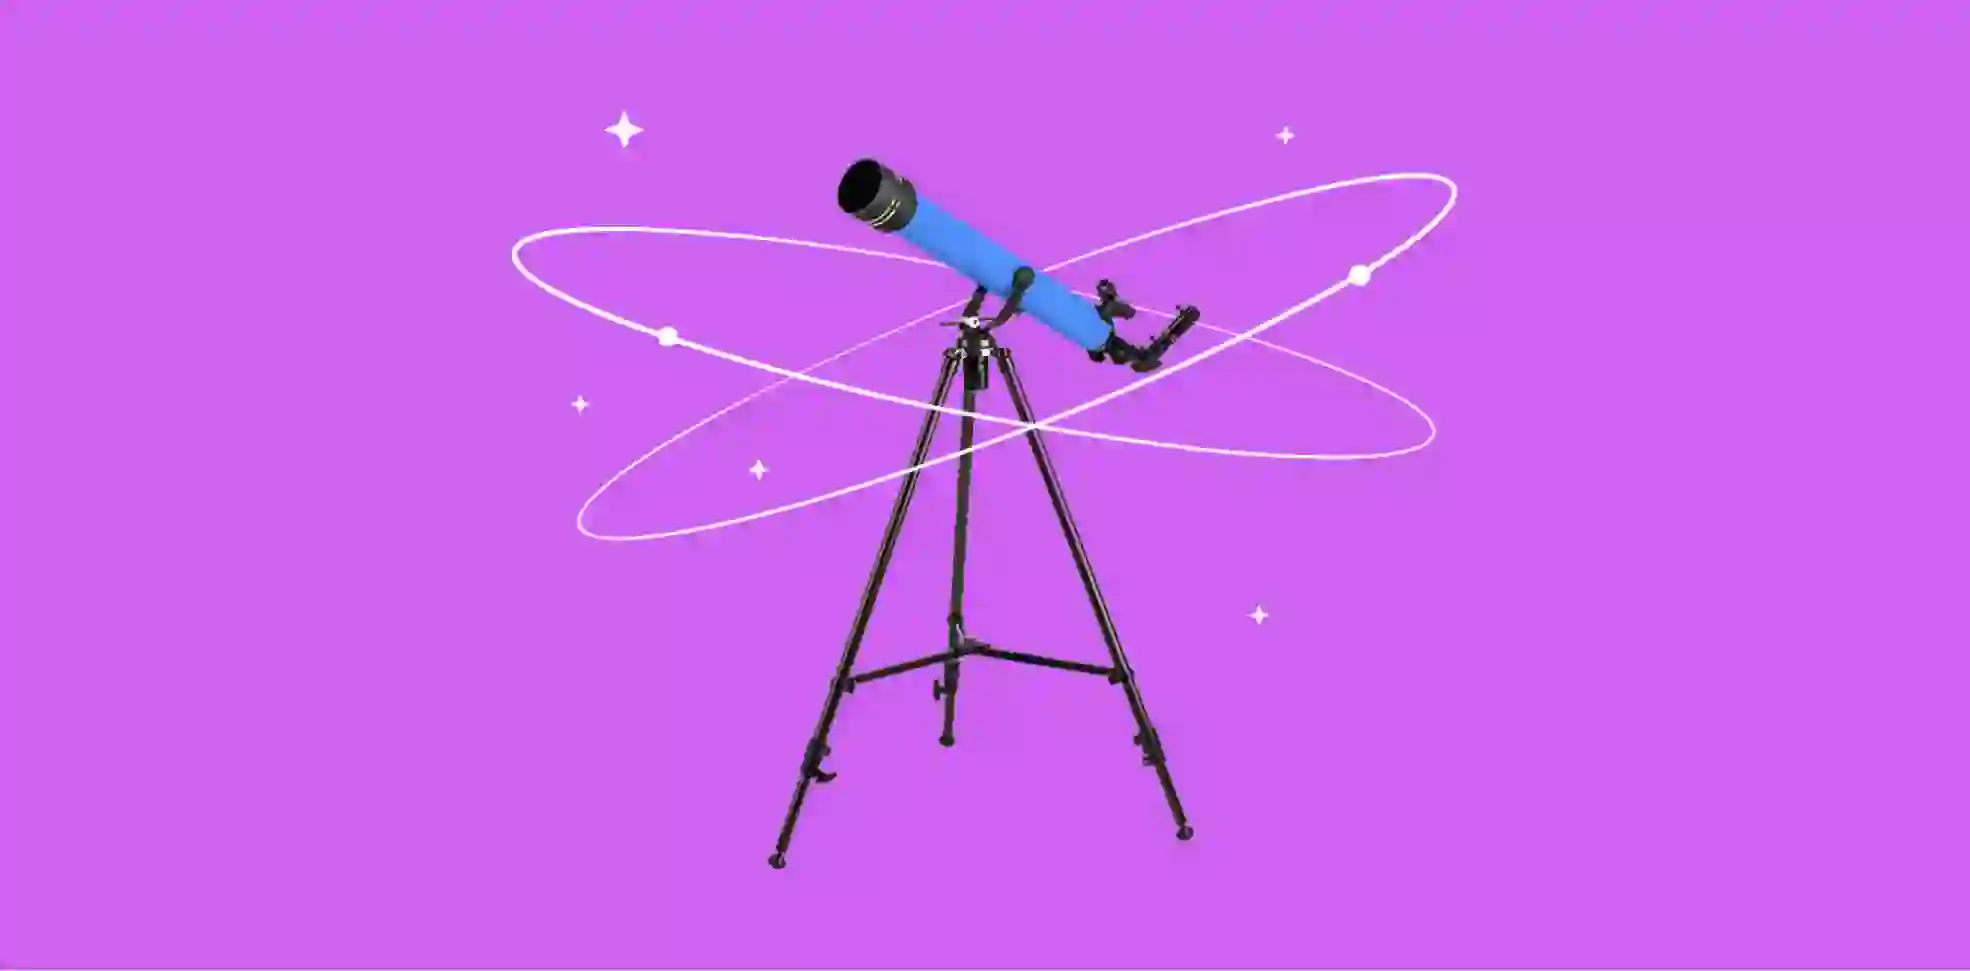 telescope on purple background